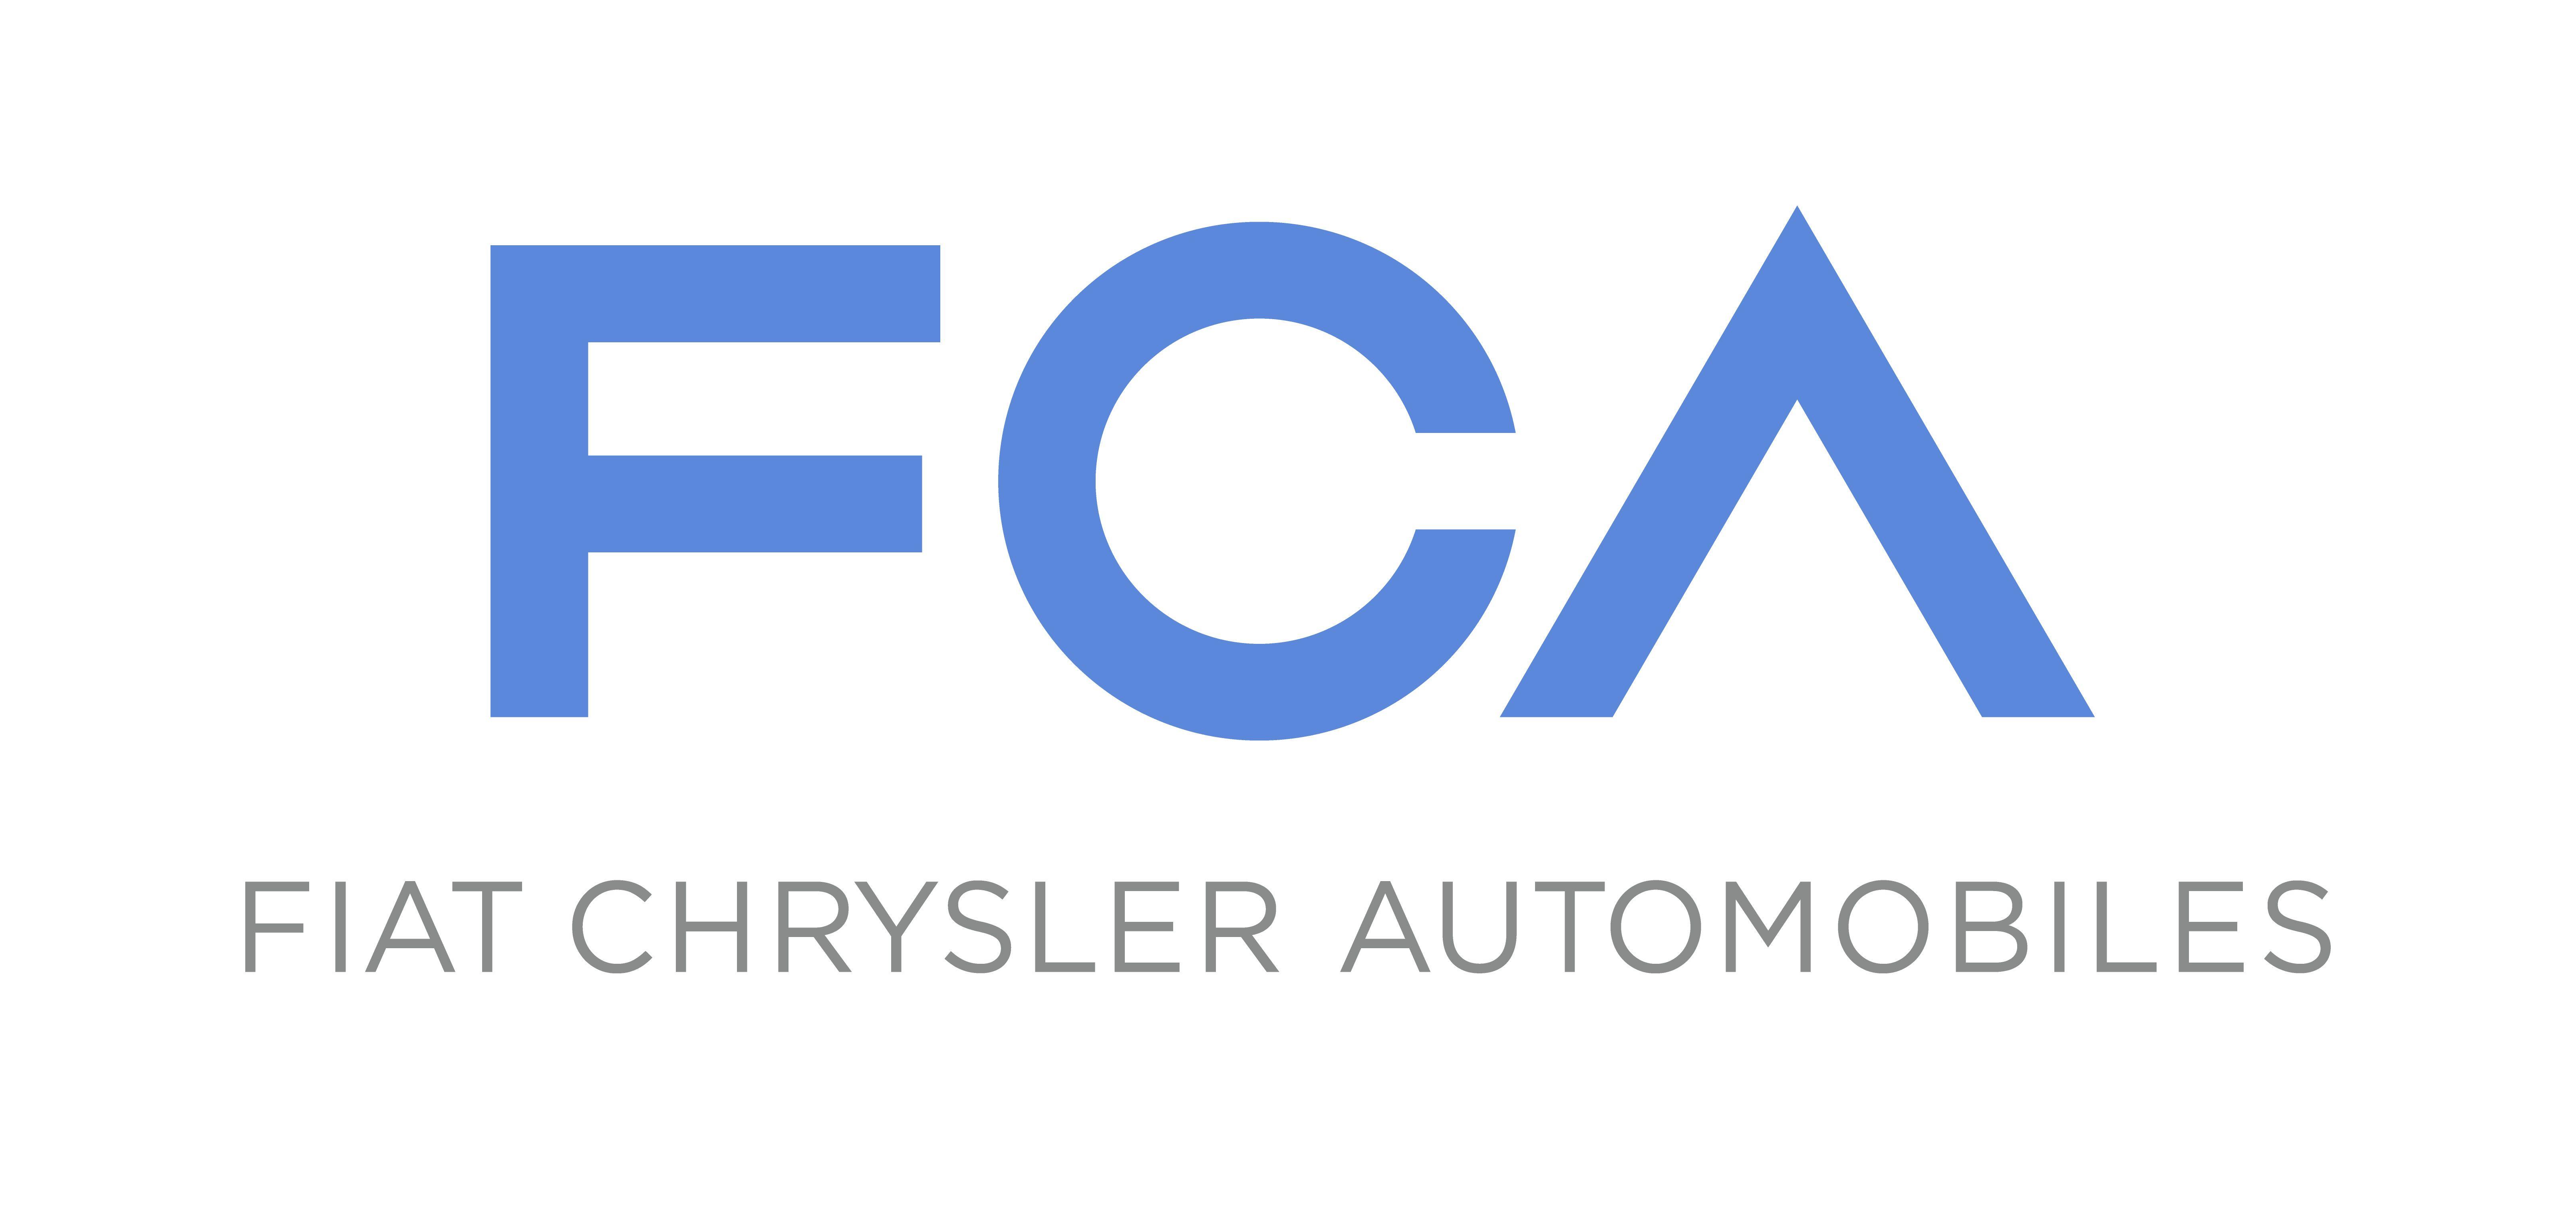 Waymo Logo - 46 Corporations Working On Autonomous Vehicles